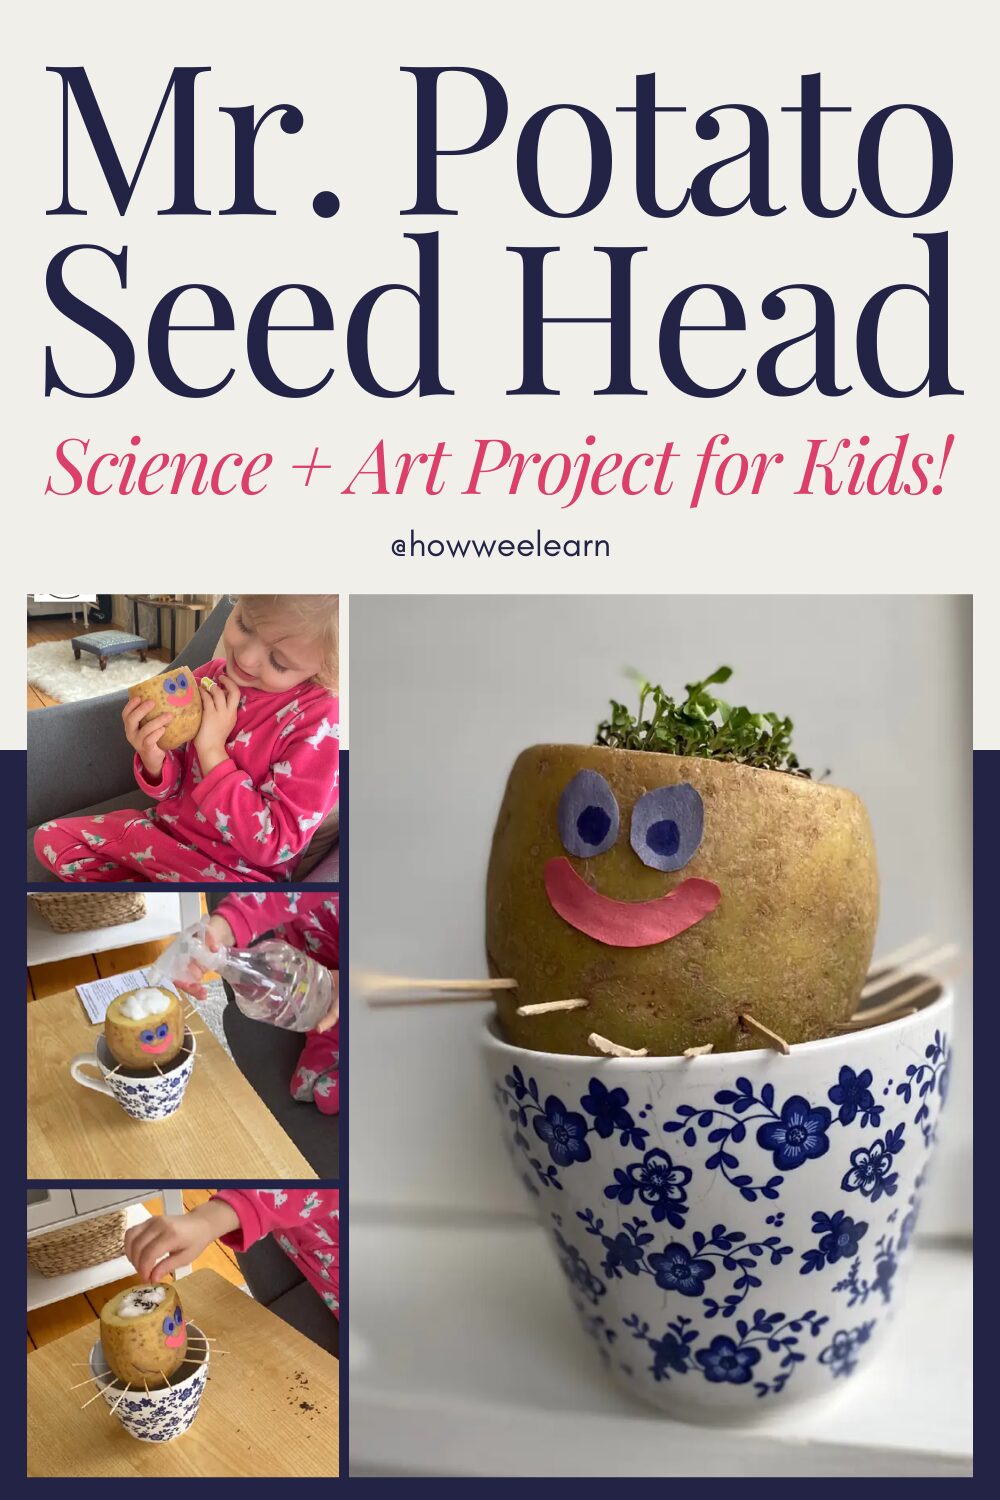 Mr. Potato Seed Head